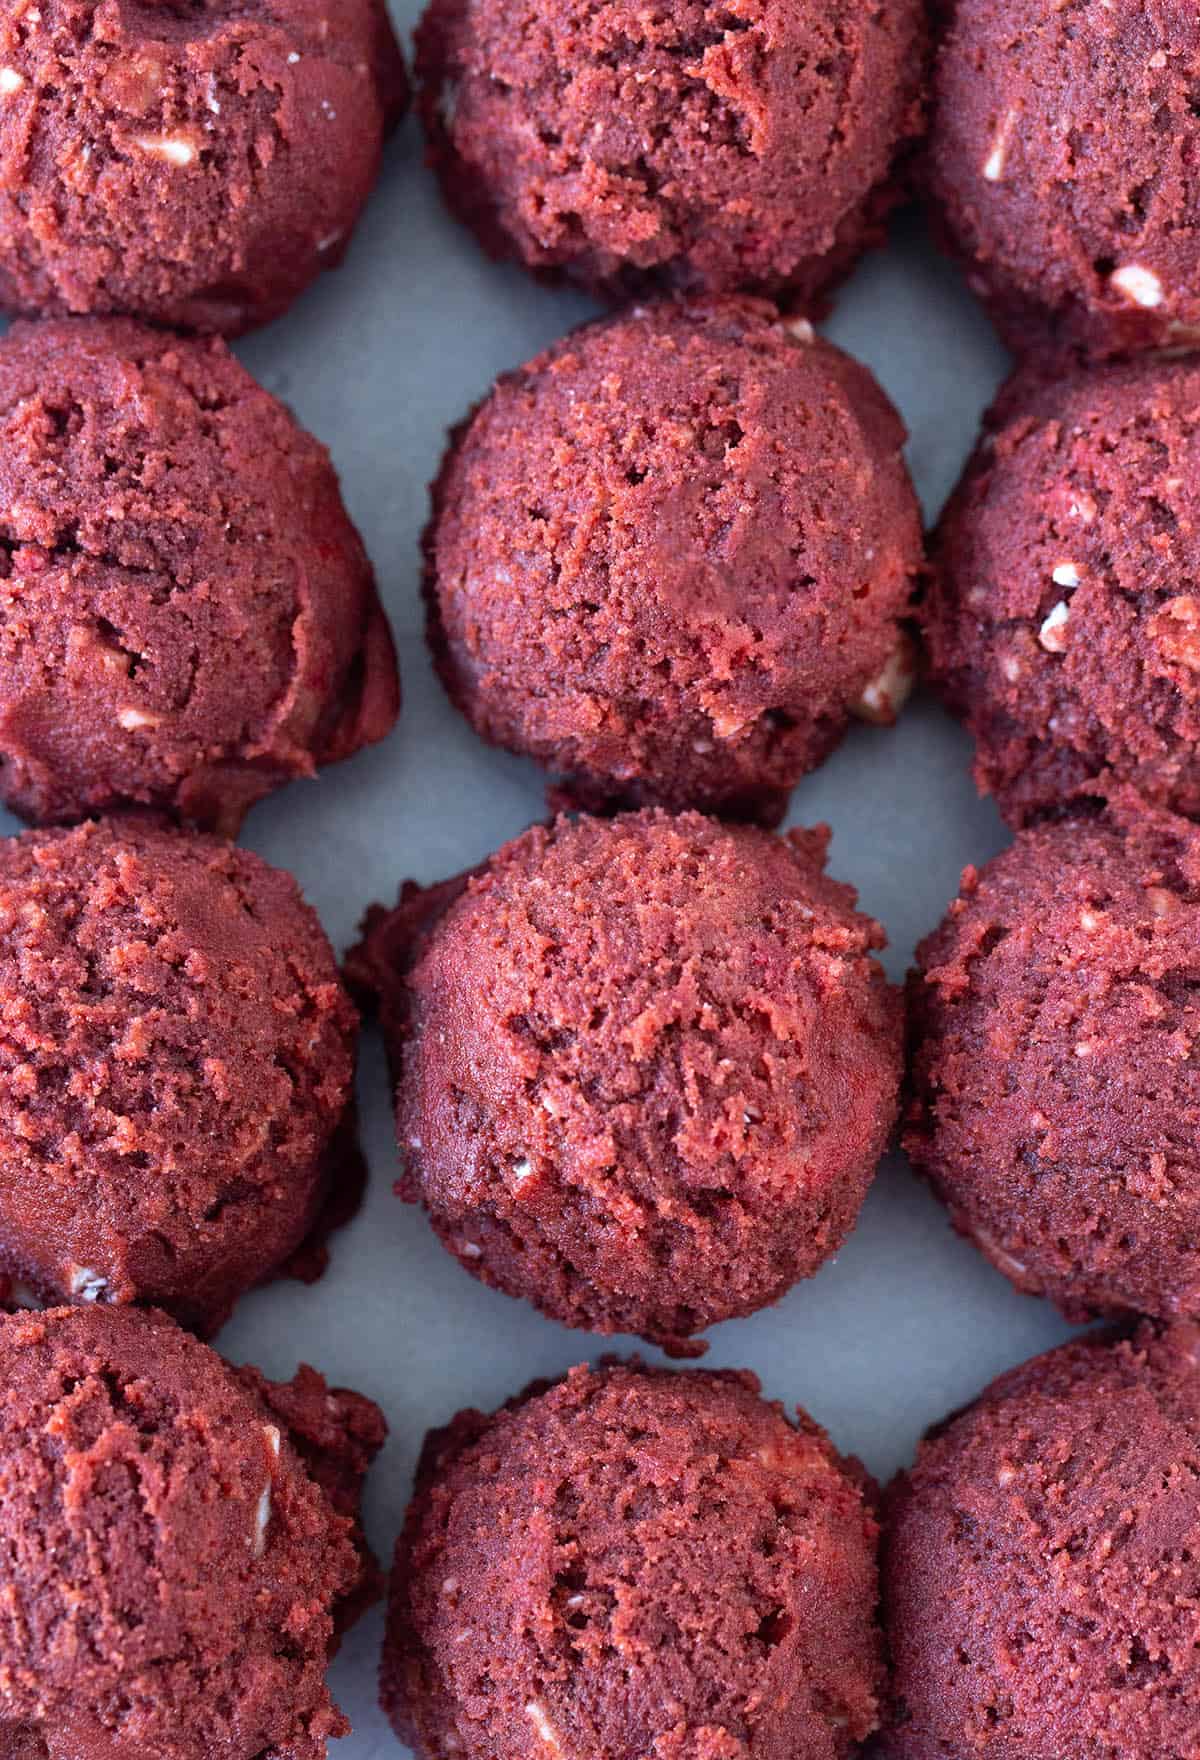 Top view of balls of red velvet cookie dough